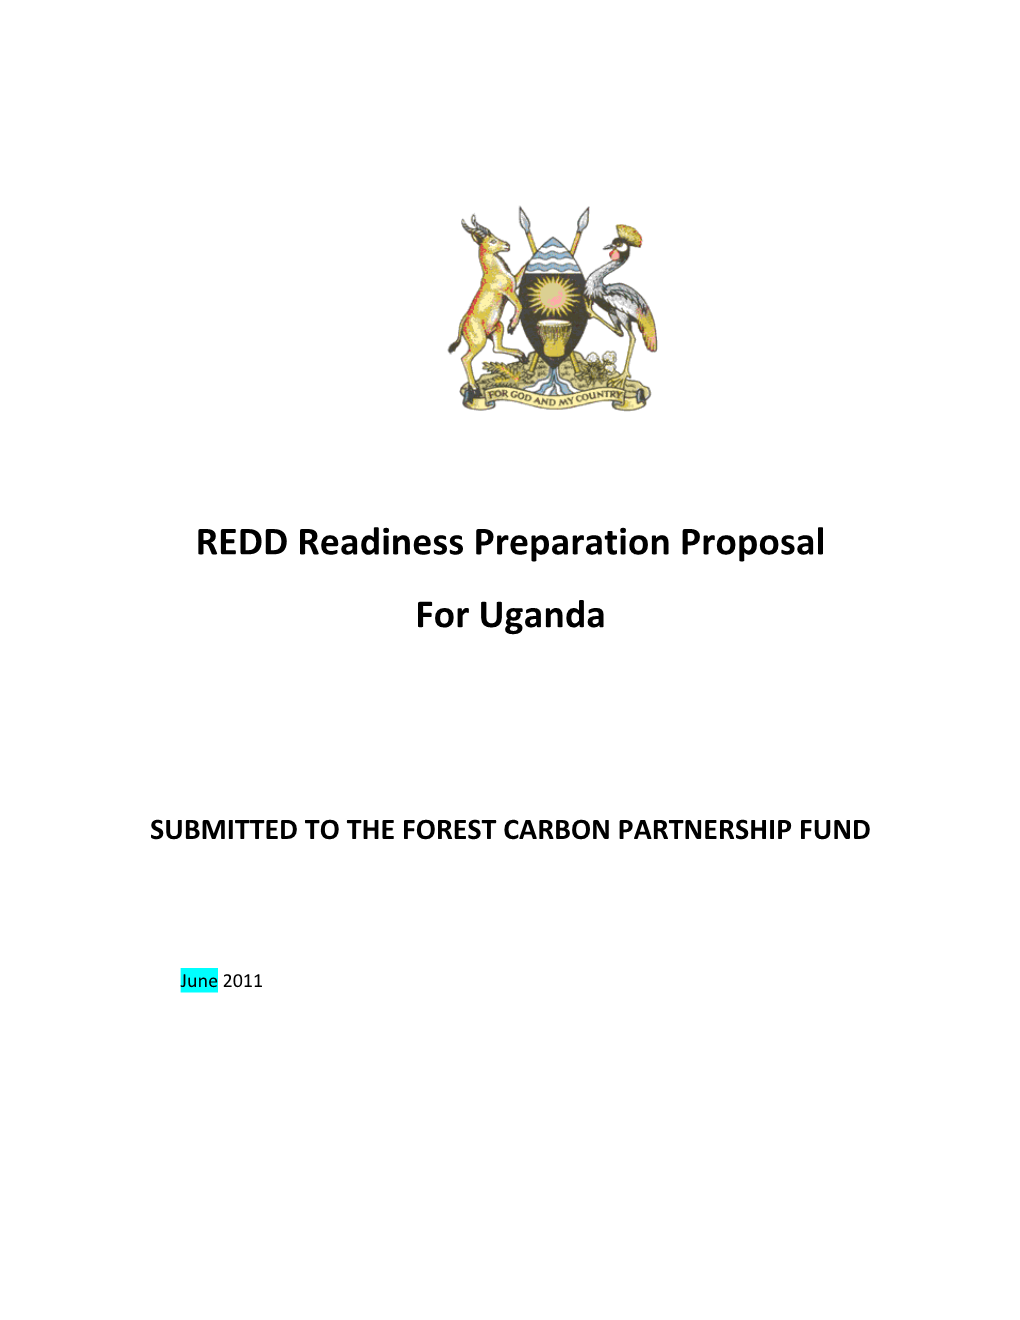 REDD Readiness Proposal for Uganda